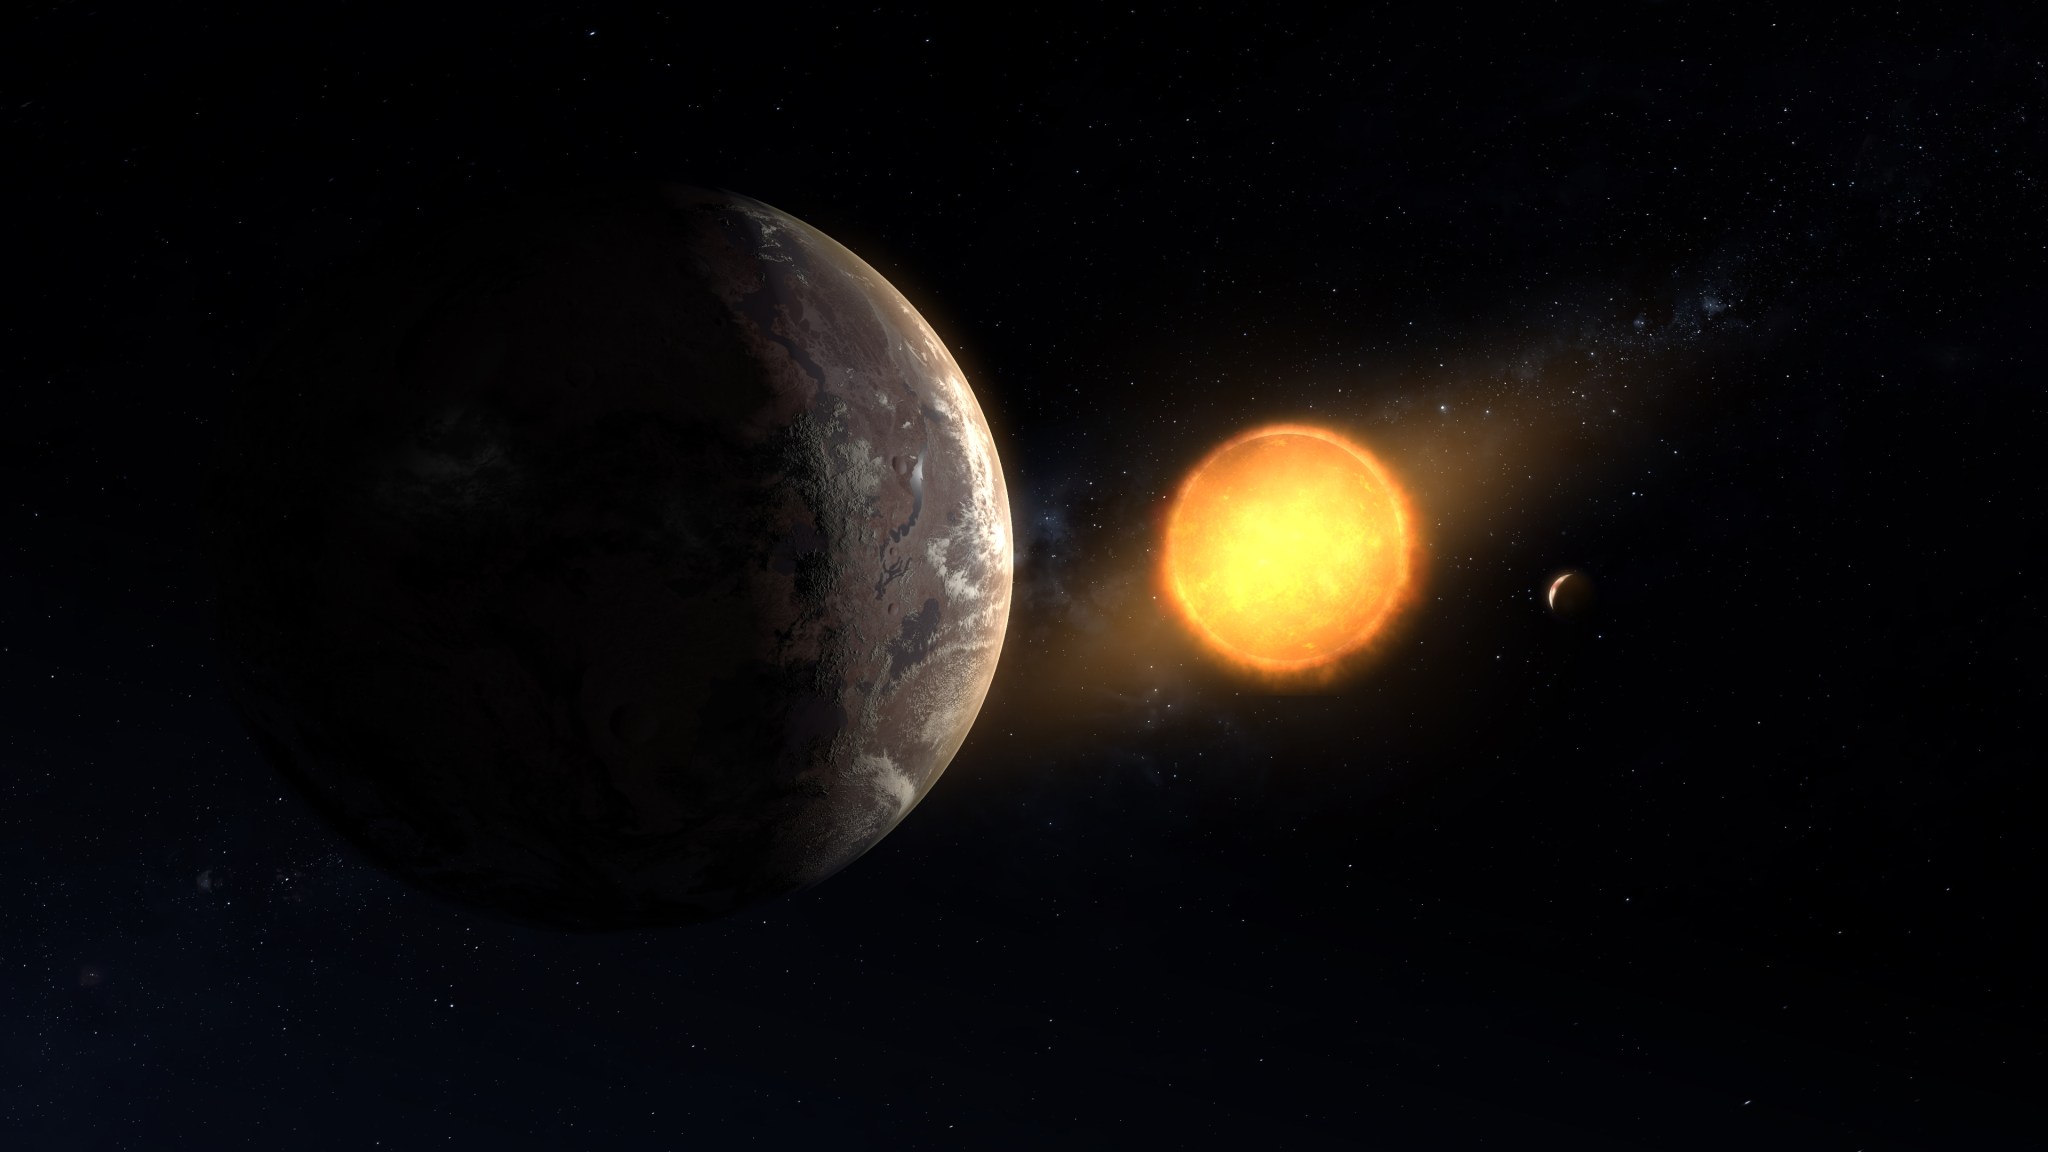 An illustration of Kepler-1649c orbiting around its host red dwarf star.